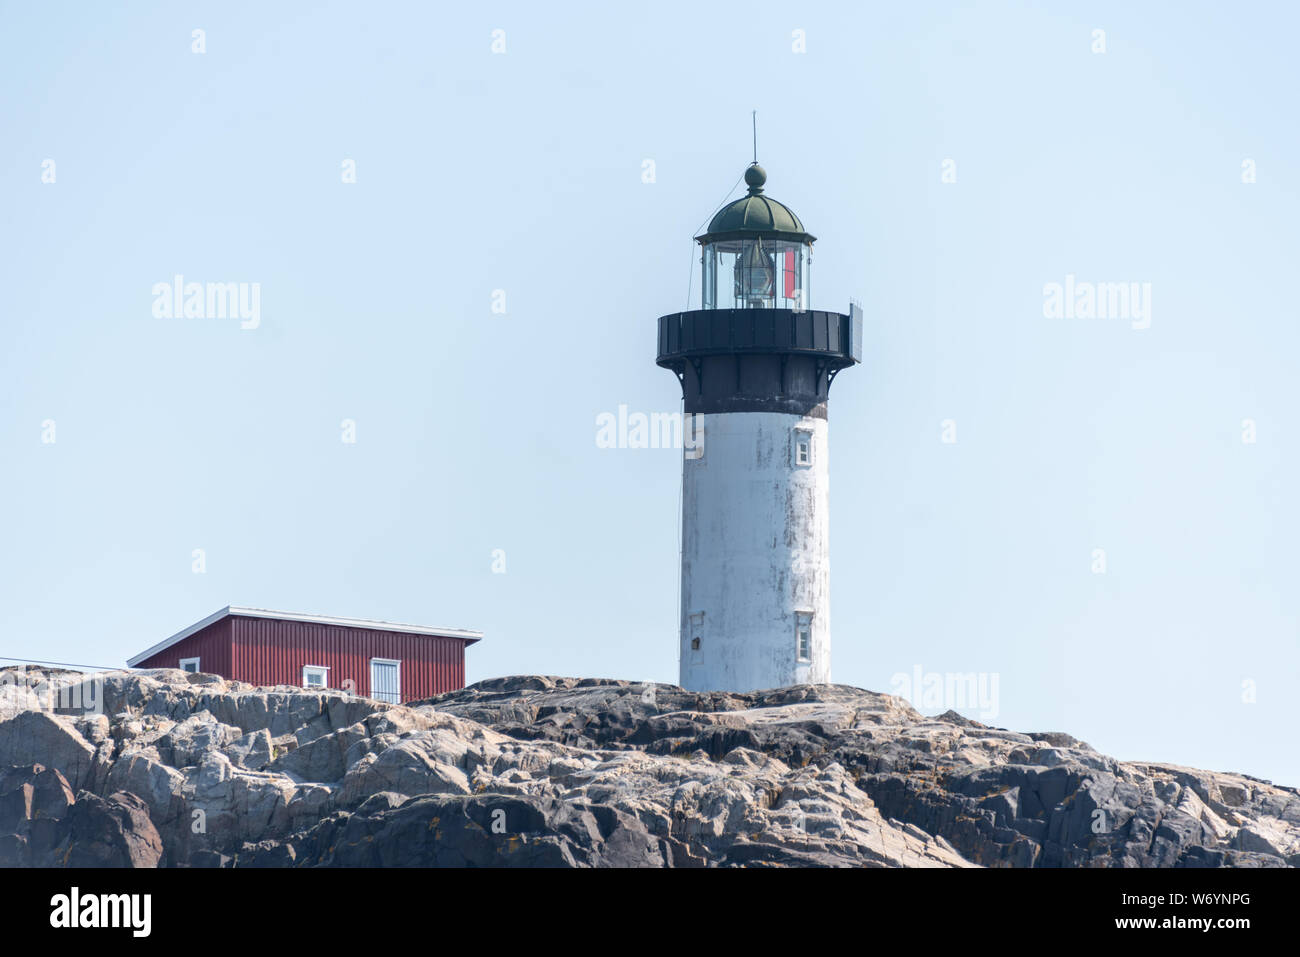 Ursholmen, Sweden - July 26, 2019: View of the lighthouse of the island Ursholmen on the Swedish west coast. Stock Photo